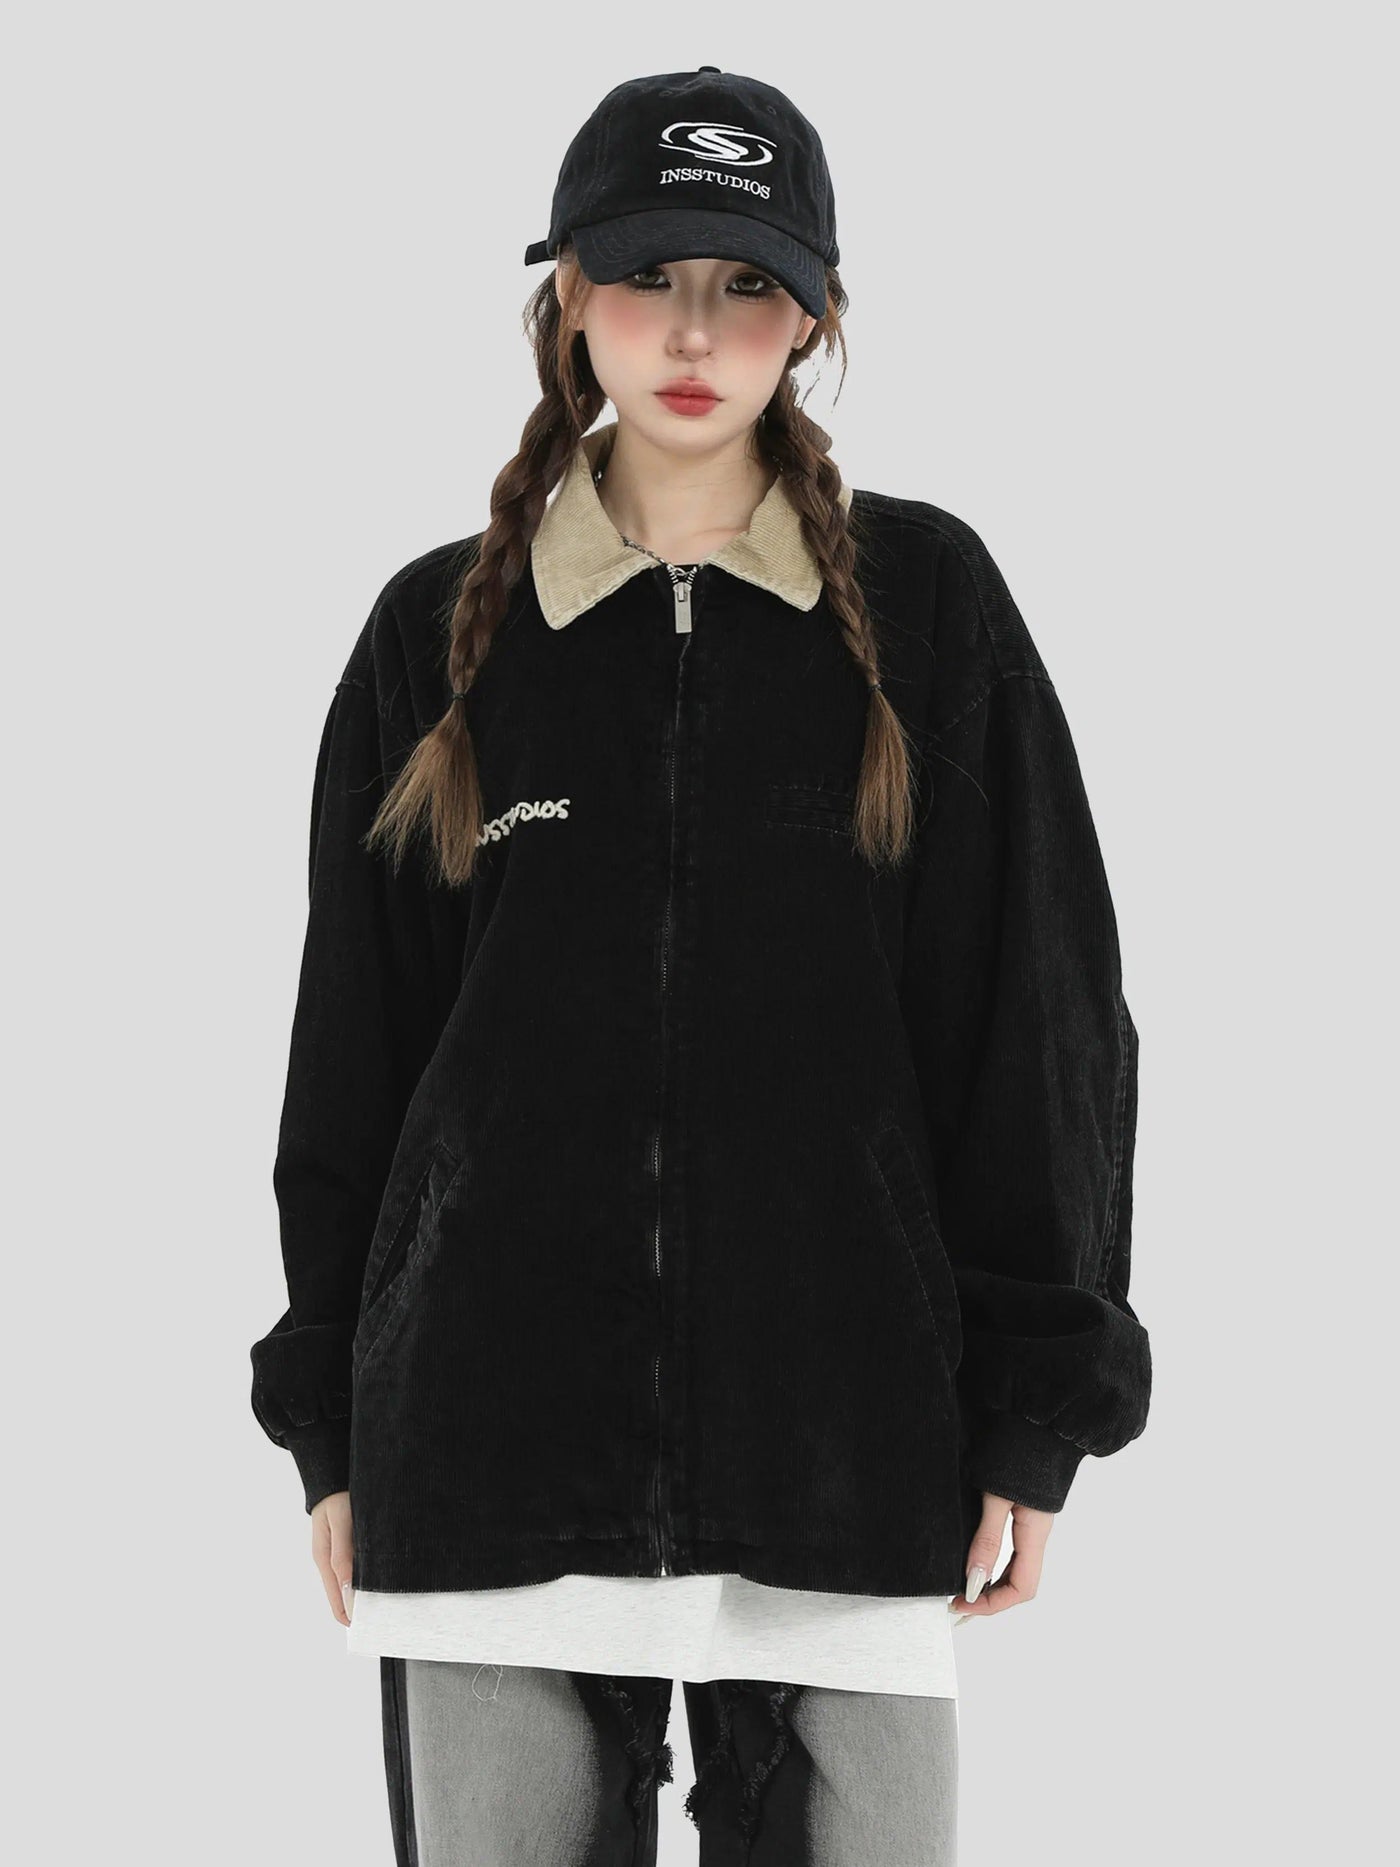 Contrast Collar Corduroy Jacket Korean Street Fashion Jacket By INS Korea Shop Online at OH Vault